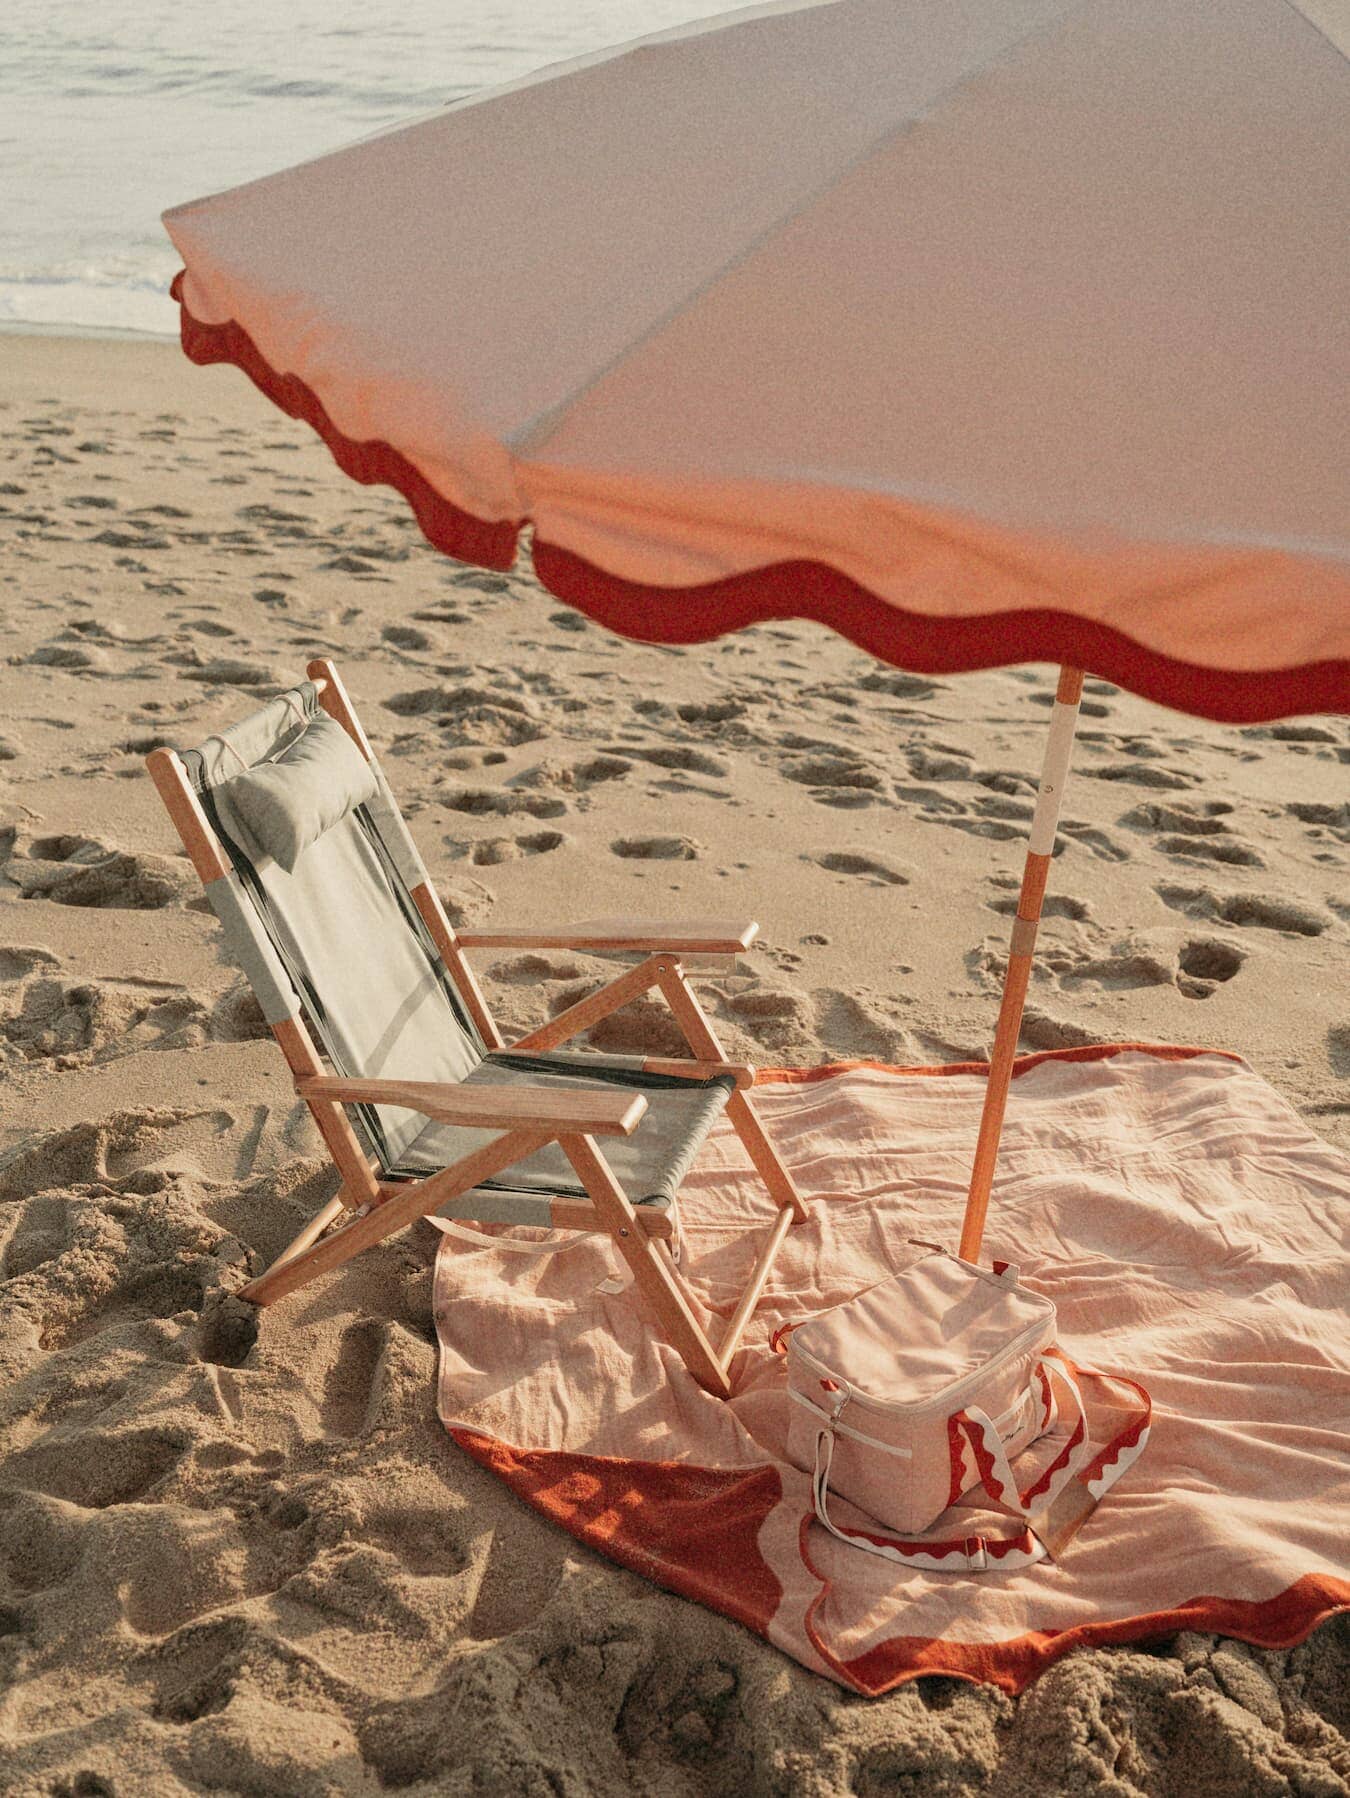 Riviera pink umbrella, blanket, cooler on the beach